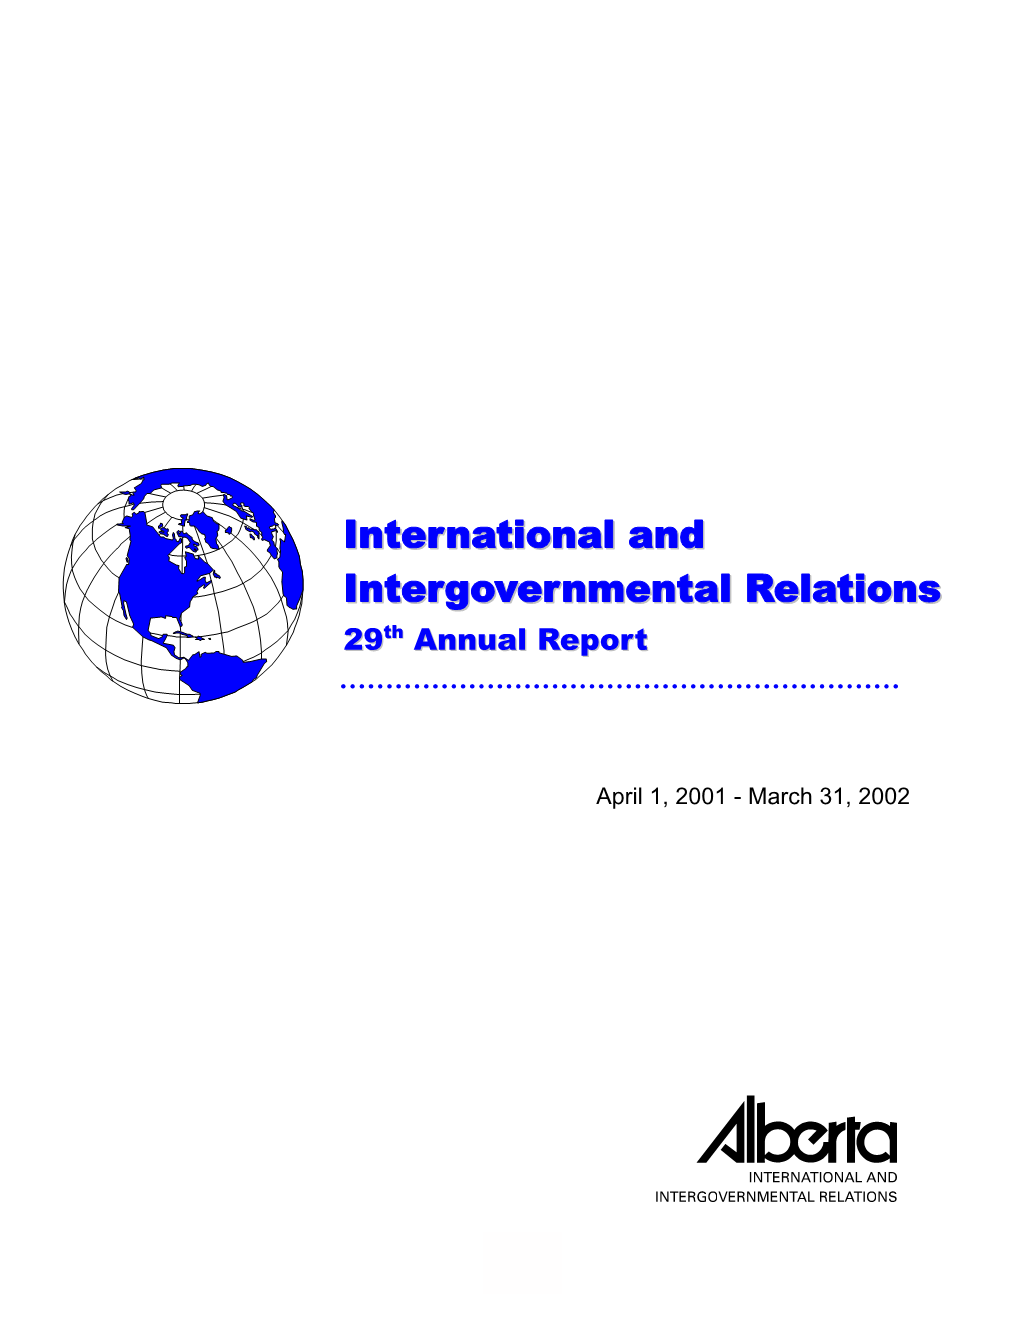 International and Intergovernmental Relations